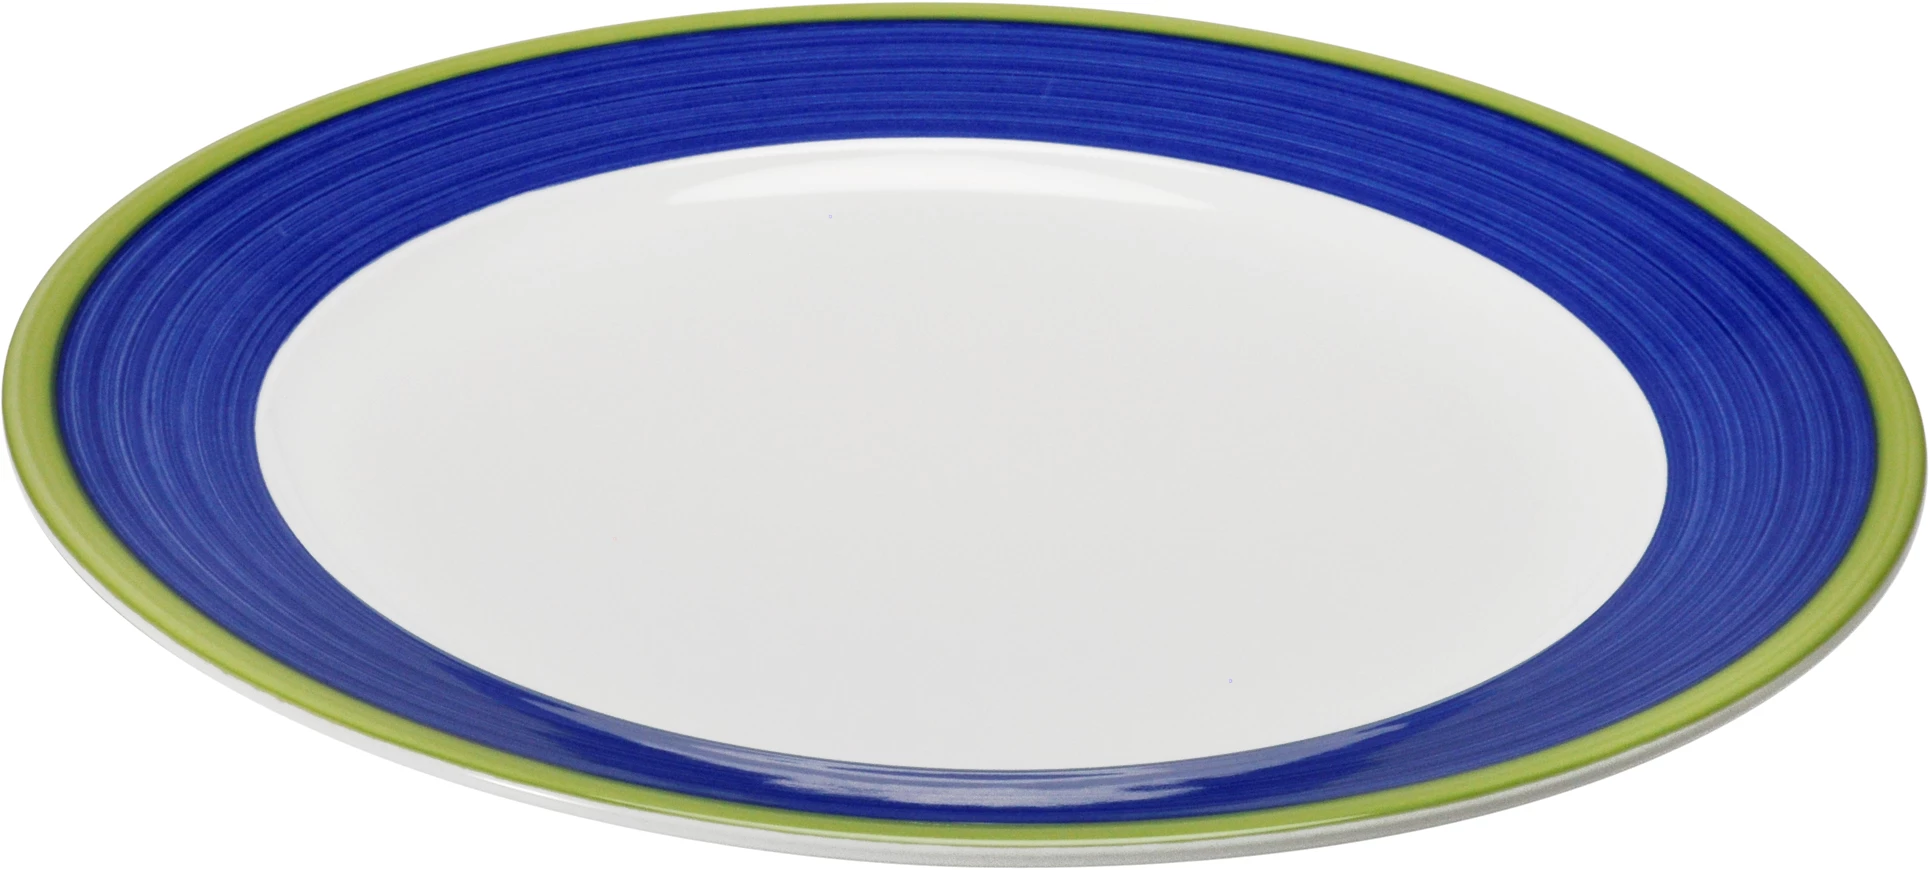 Figgjo Capri tallerken, flad, blå, ø26,5 cm